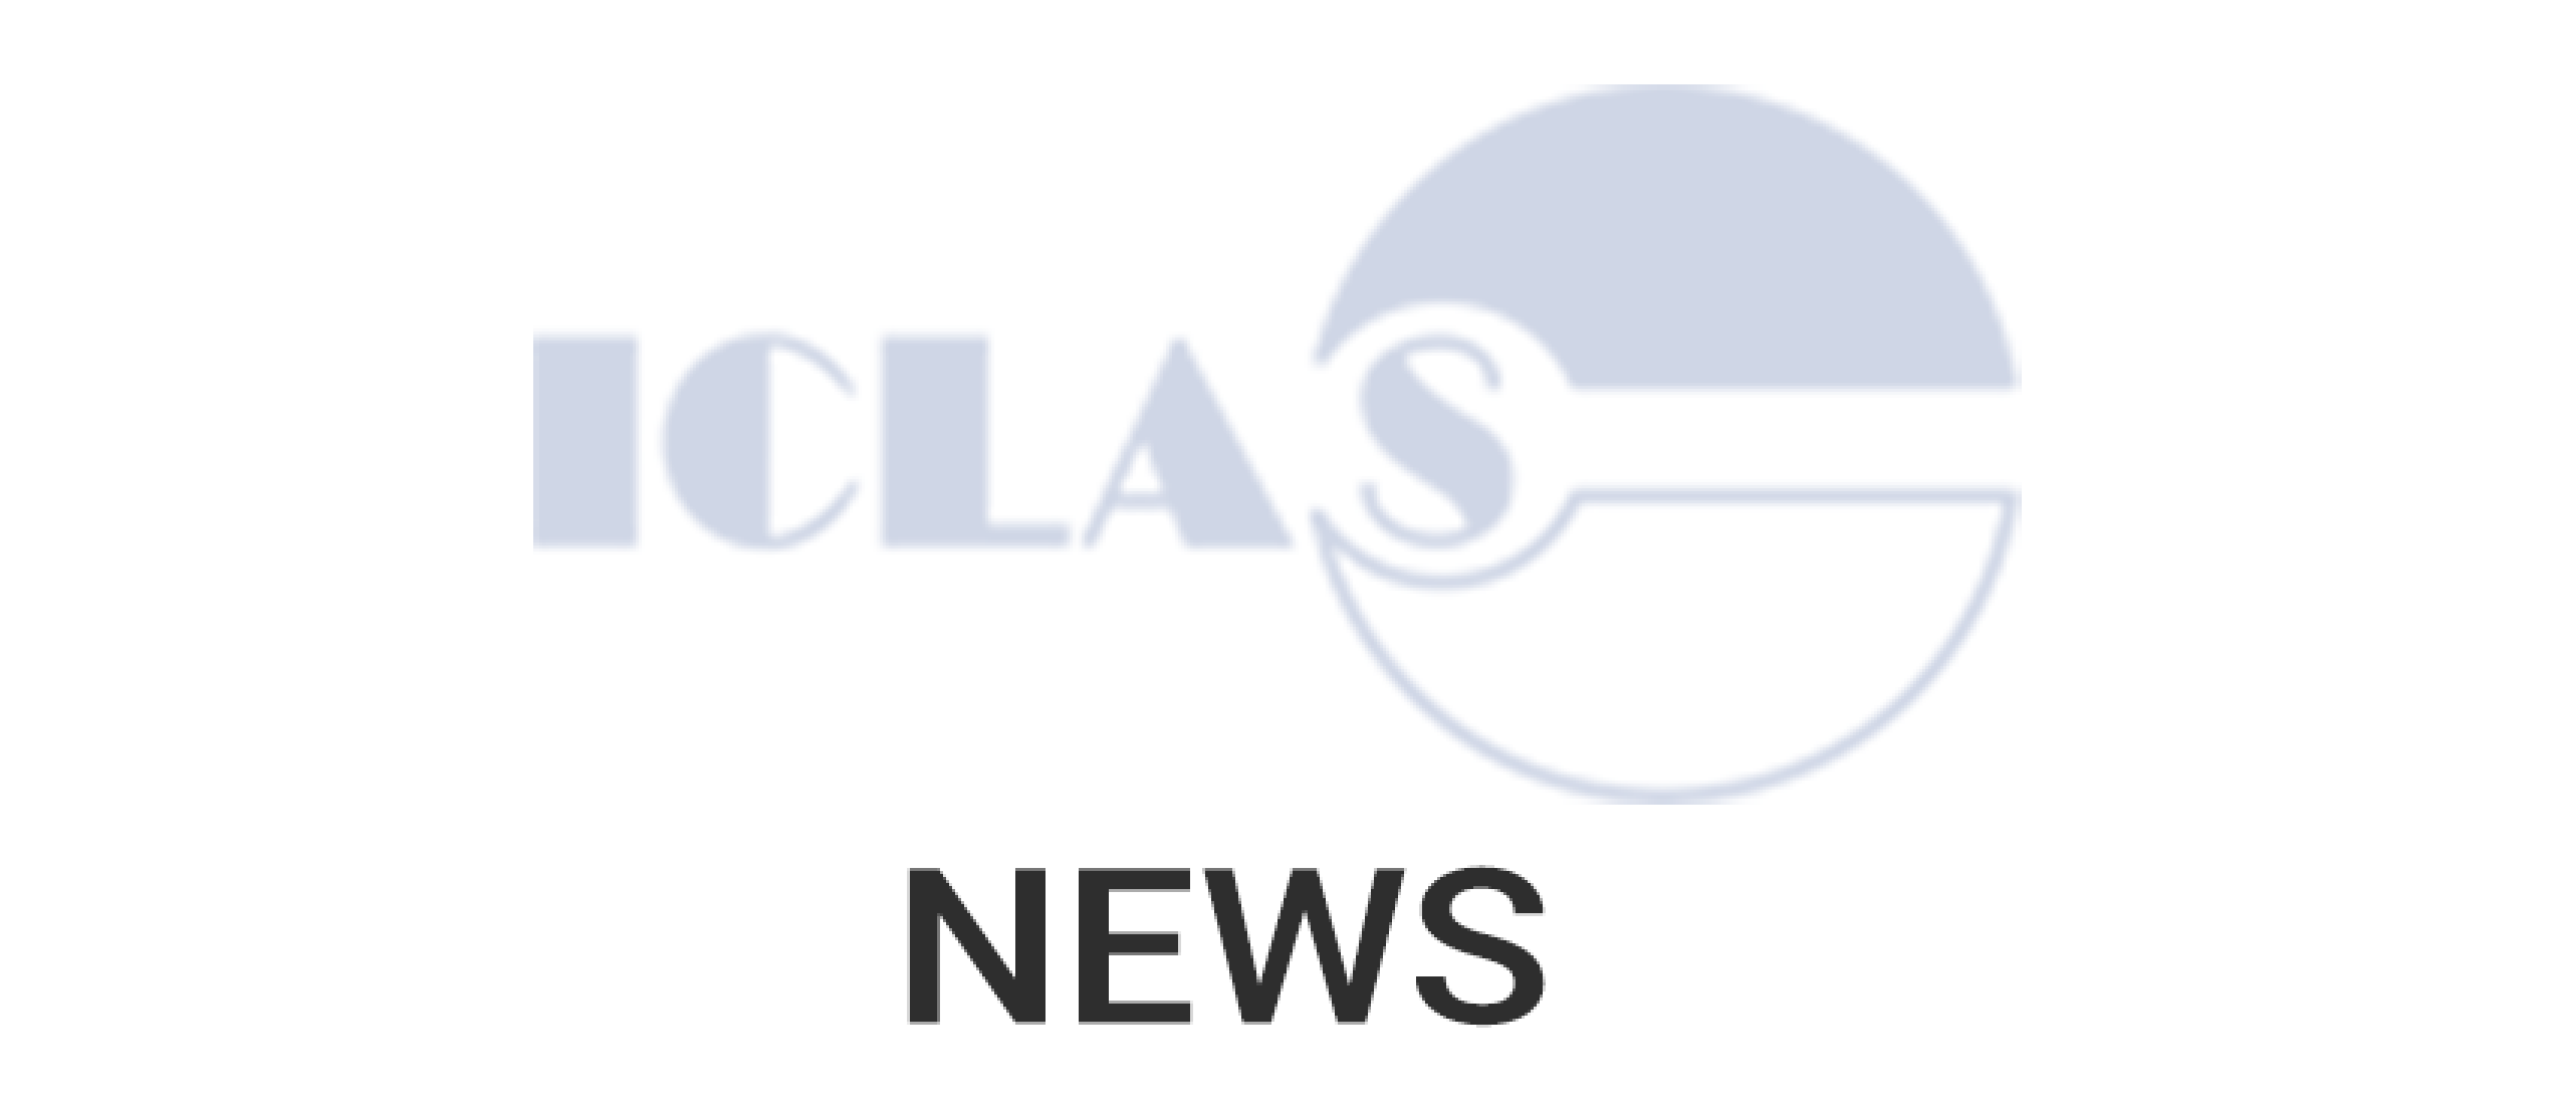 ICLAS News Report July 2022